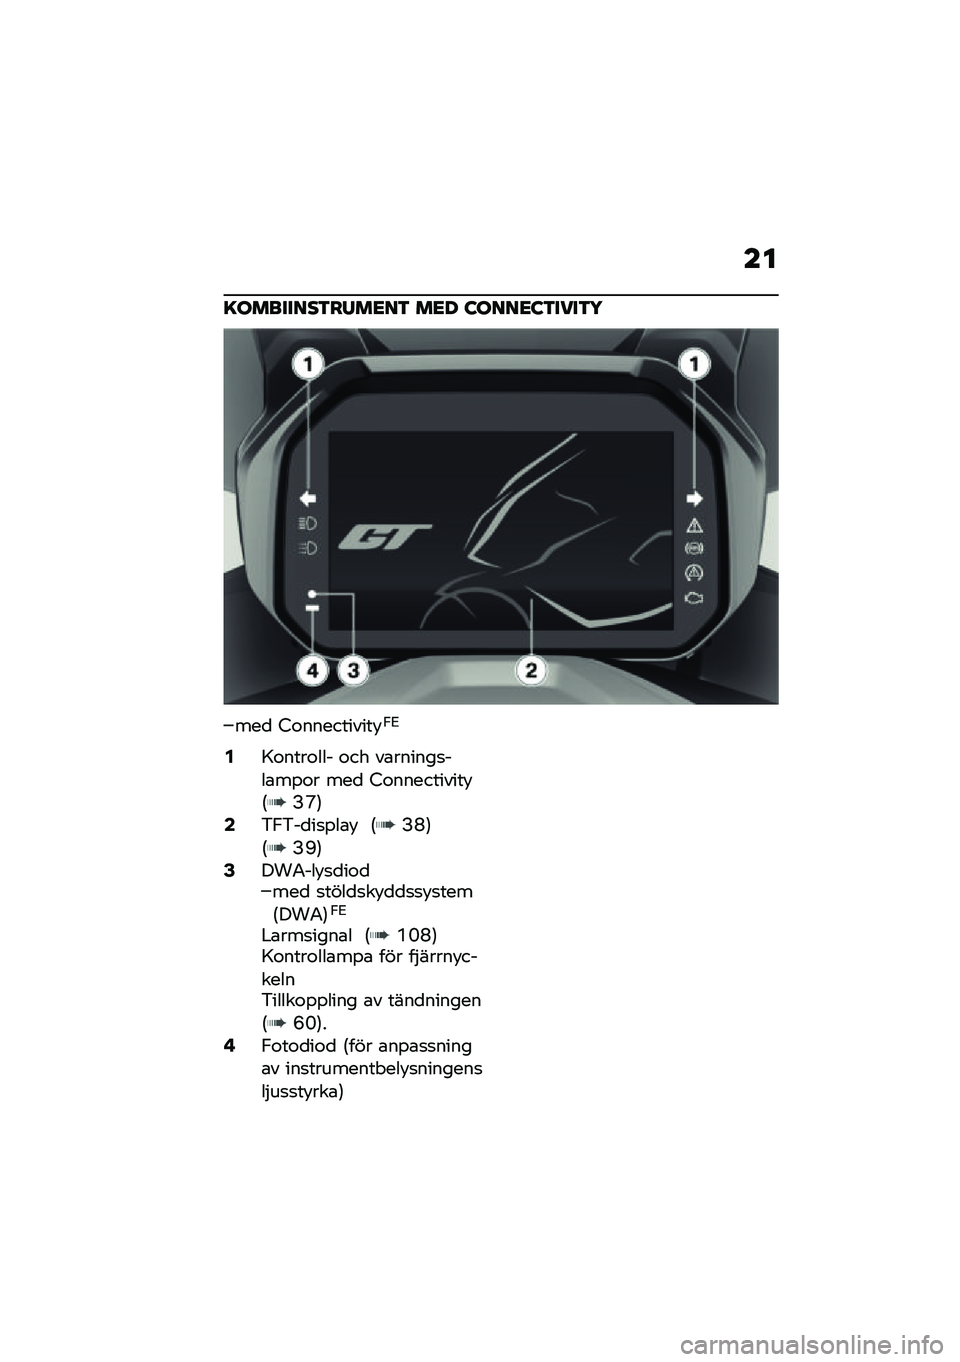 BMW MOTORRAD C 400 GT 2021  Instruktionsbok (in Swedish) ��
�=��������3��/��<��3 ��<� �:����<�:�3����3�5
���
 �8�\f����������!�0�6
�2�A�\f����\f��� �\f�� ��\b������
���\b��%�\f� ���
 �8�\f���������